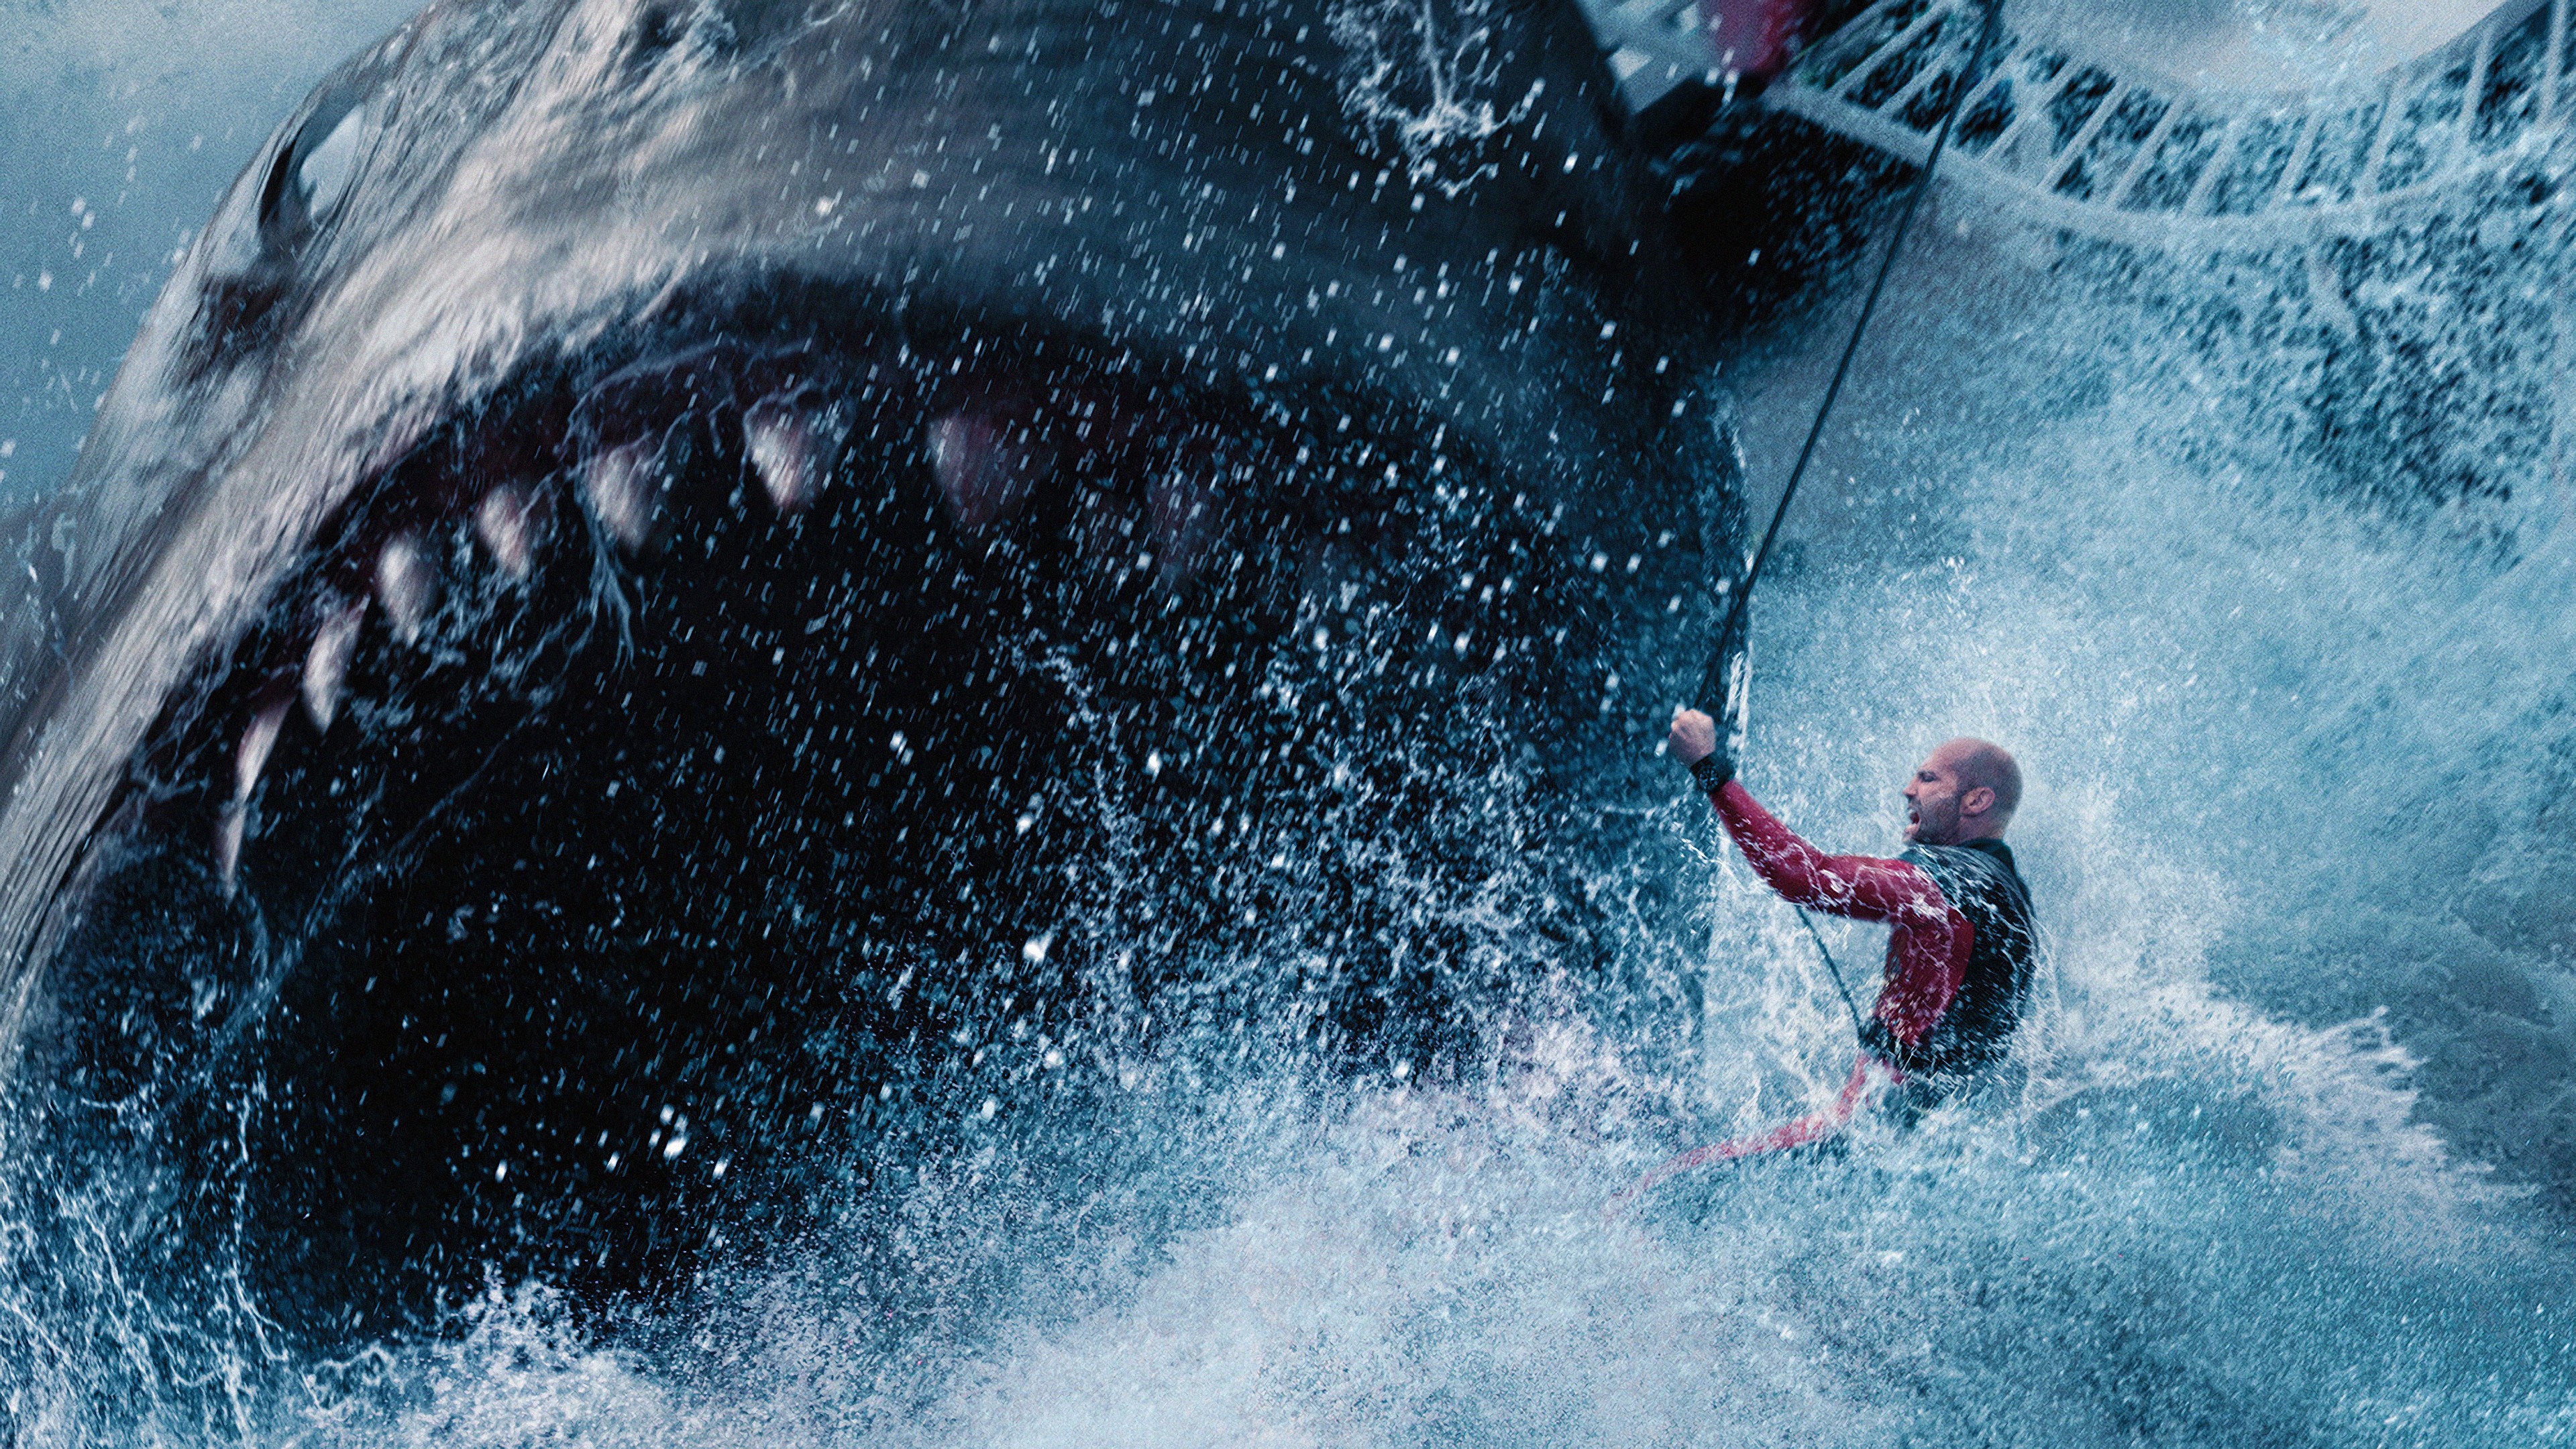 The Meg Jason Statham as Jonas Taylor Fighting Megalodon Shark 4K